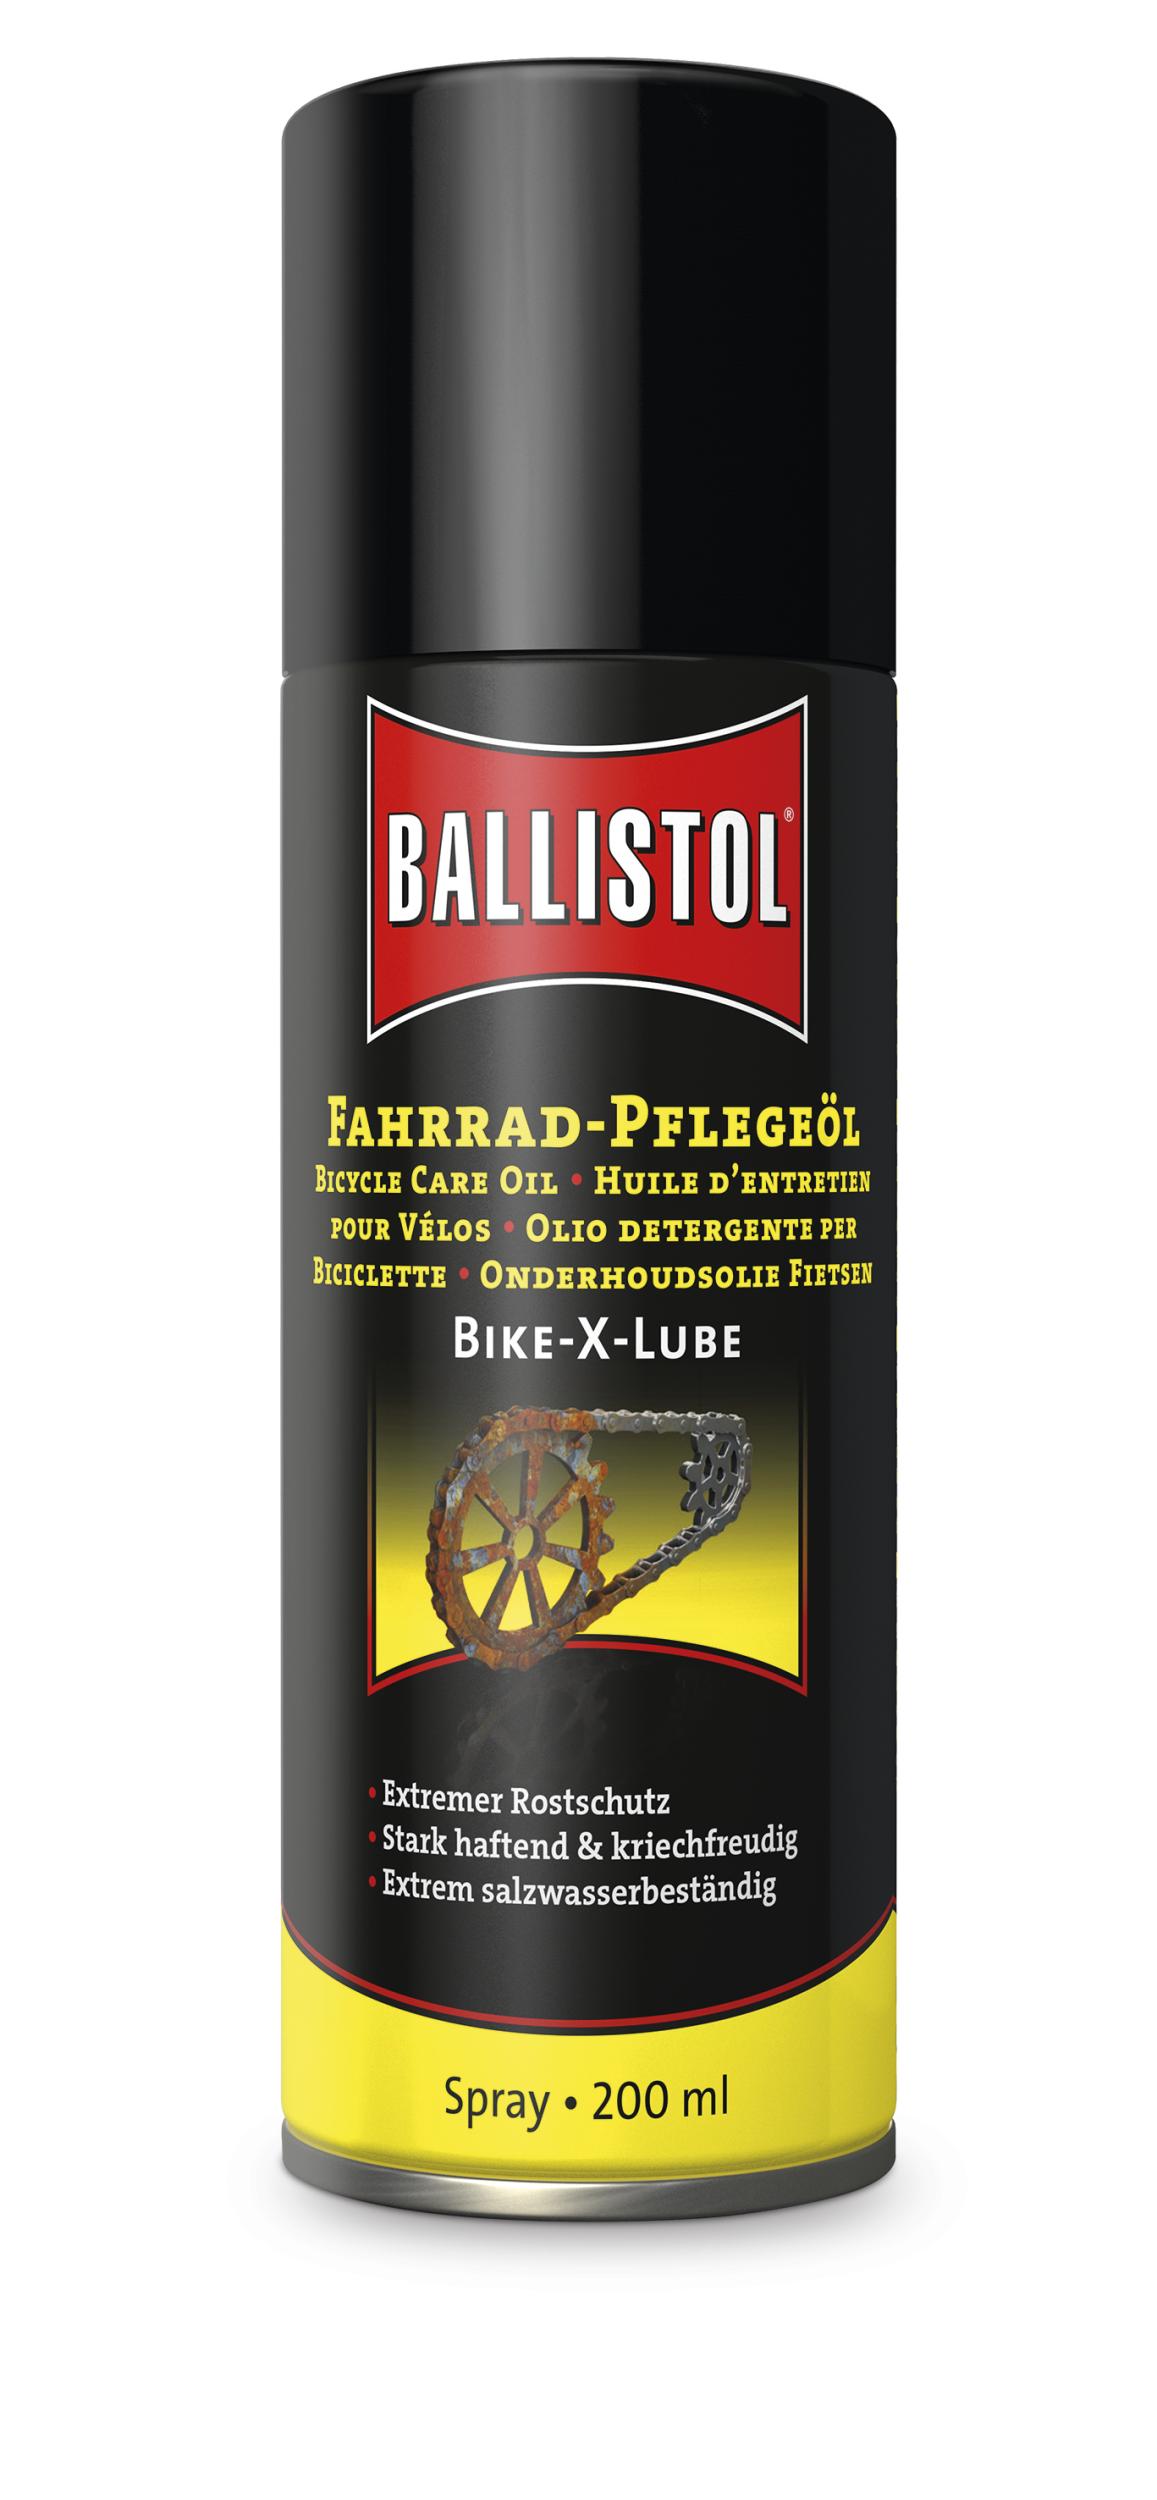 Ballistol Fahrrad-Pflegeöl "Bike-X-Lube" - Spray - 200 ml